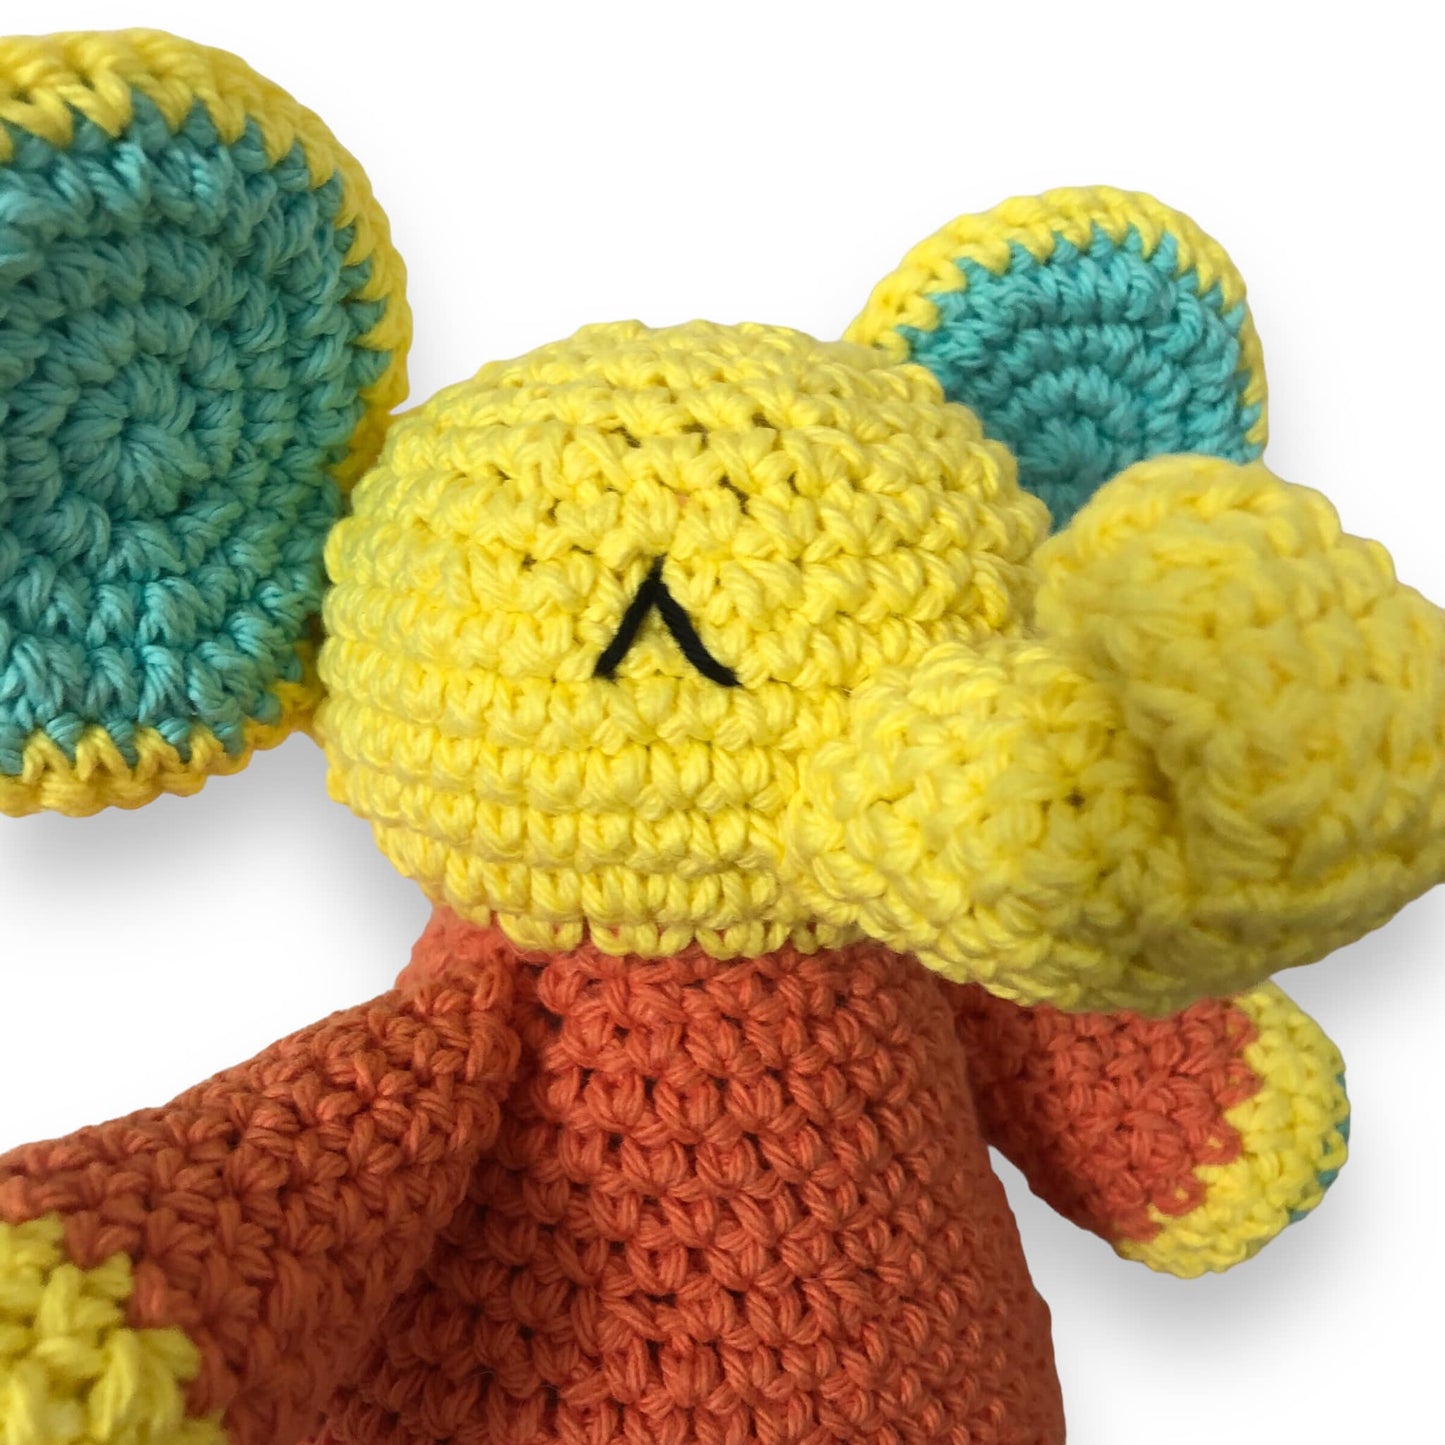 PATTERN: Crochet Bunsy Elephant with Bum